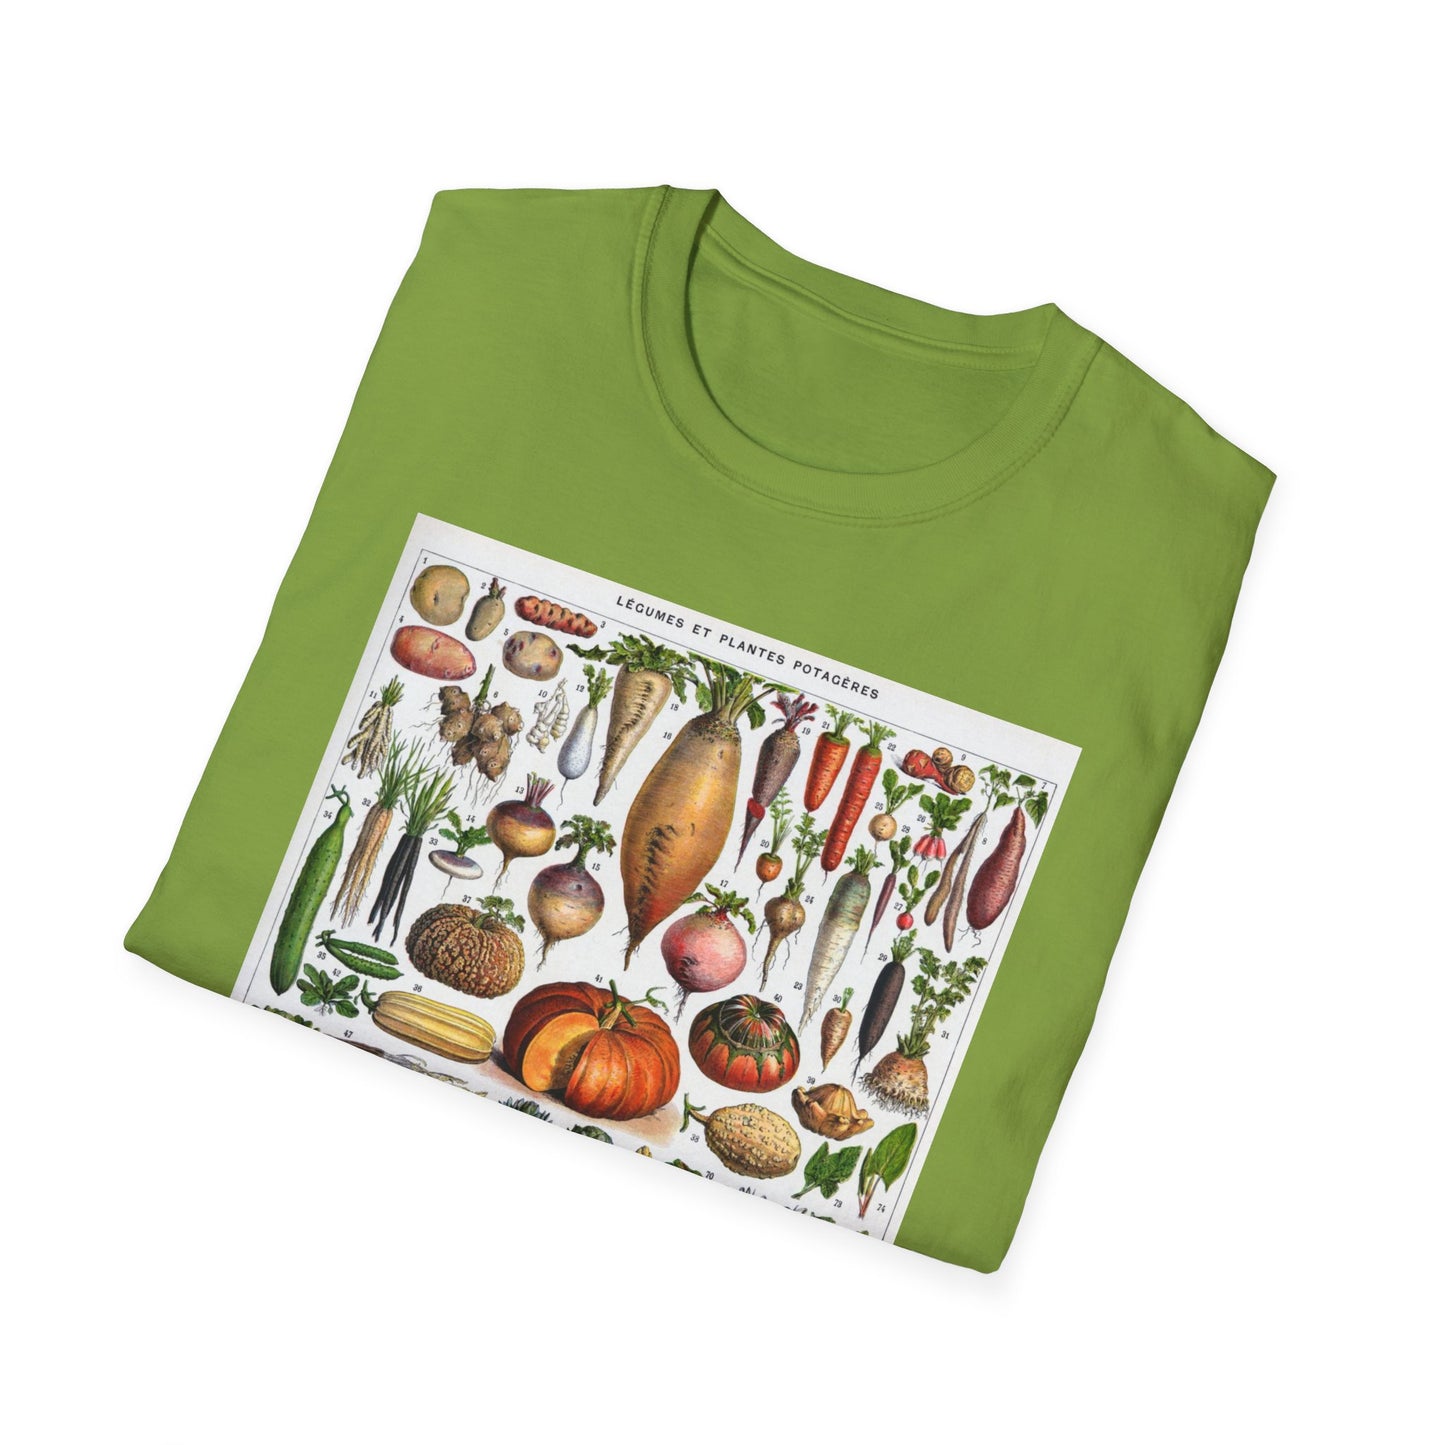 Vegetable T-Shirt